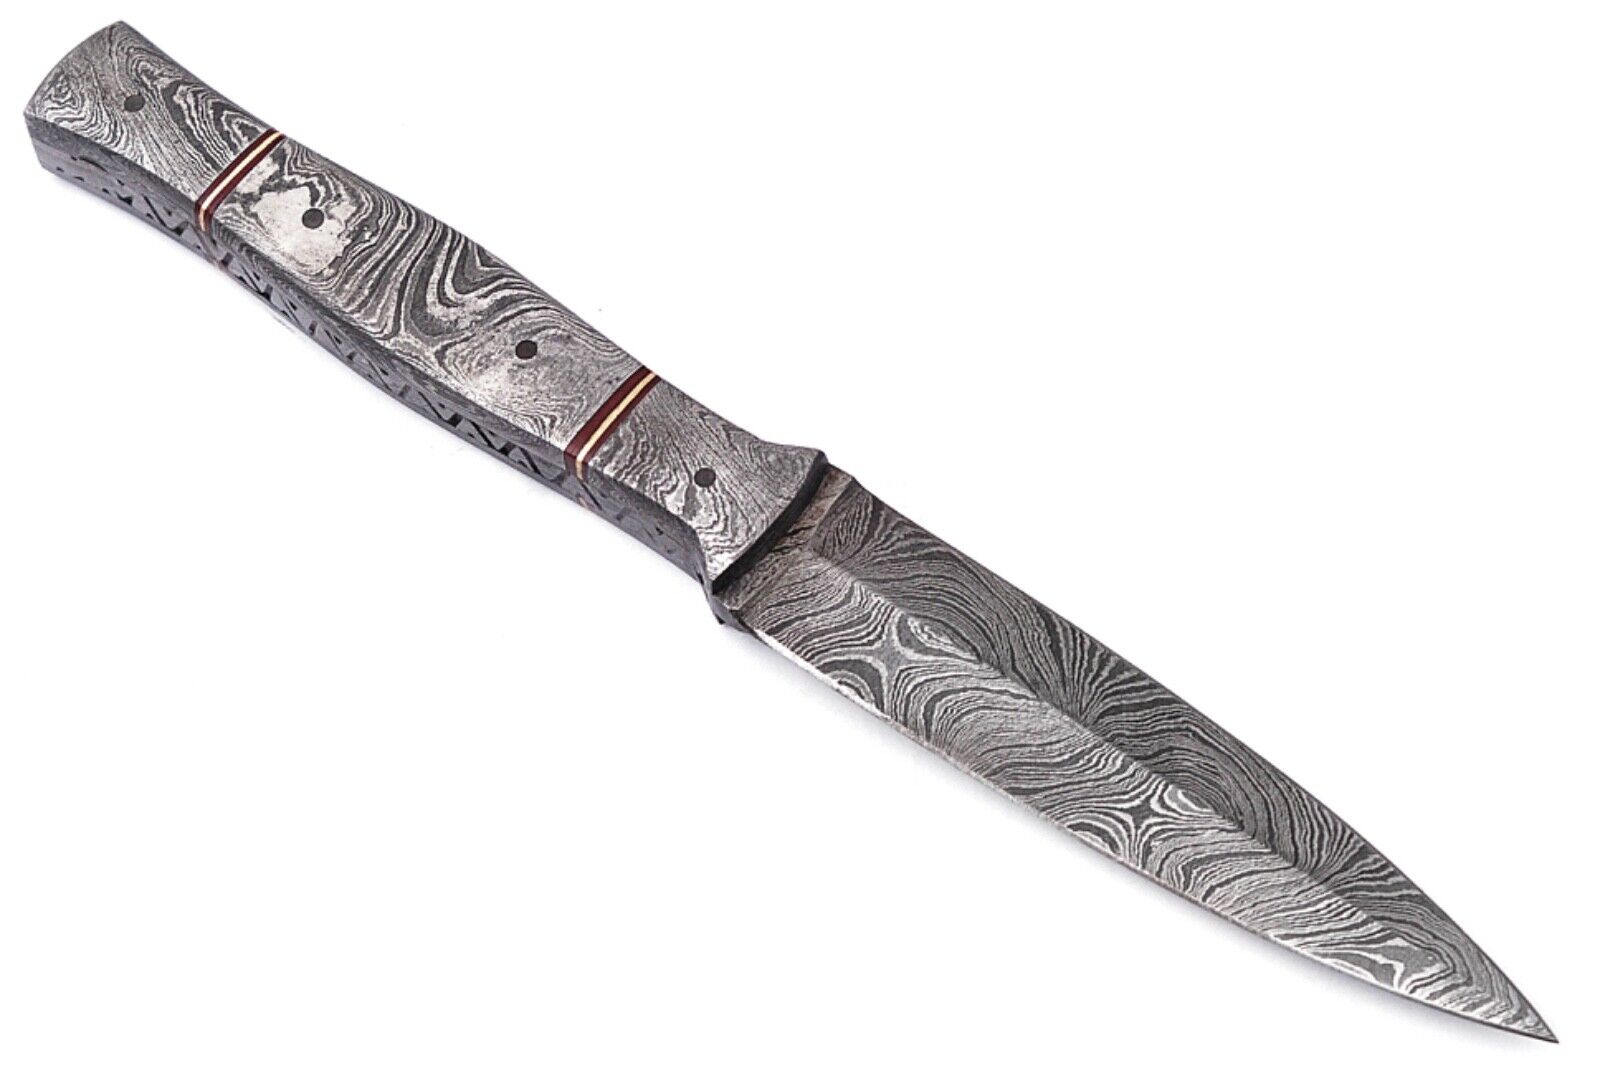 9” Handmade Damascus steel Dagger blade/knife with sheath /hunting/skinner